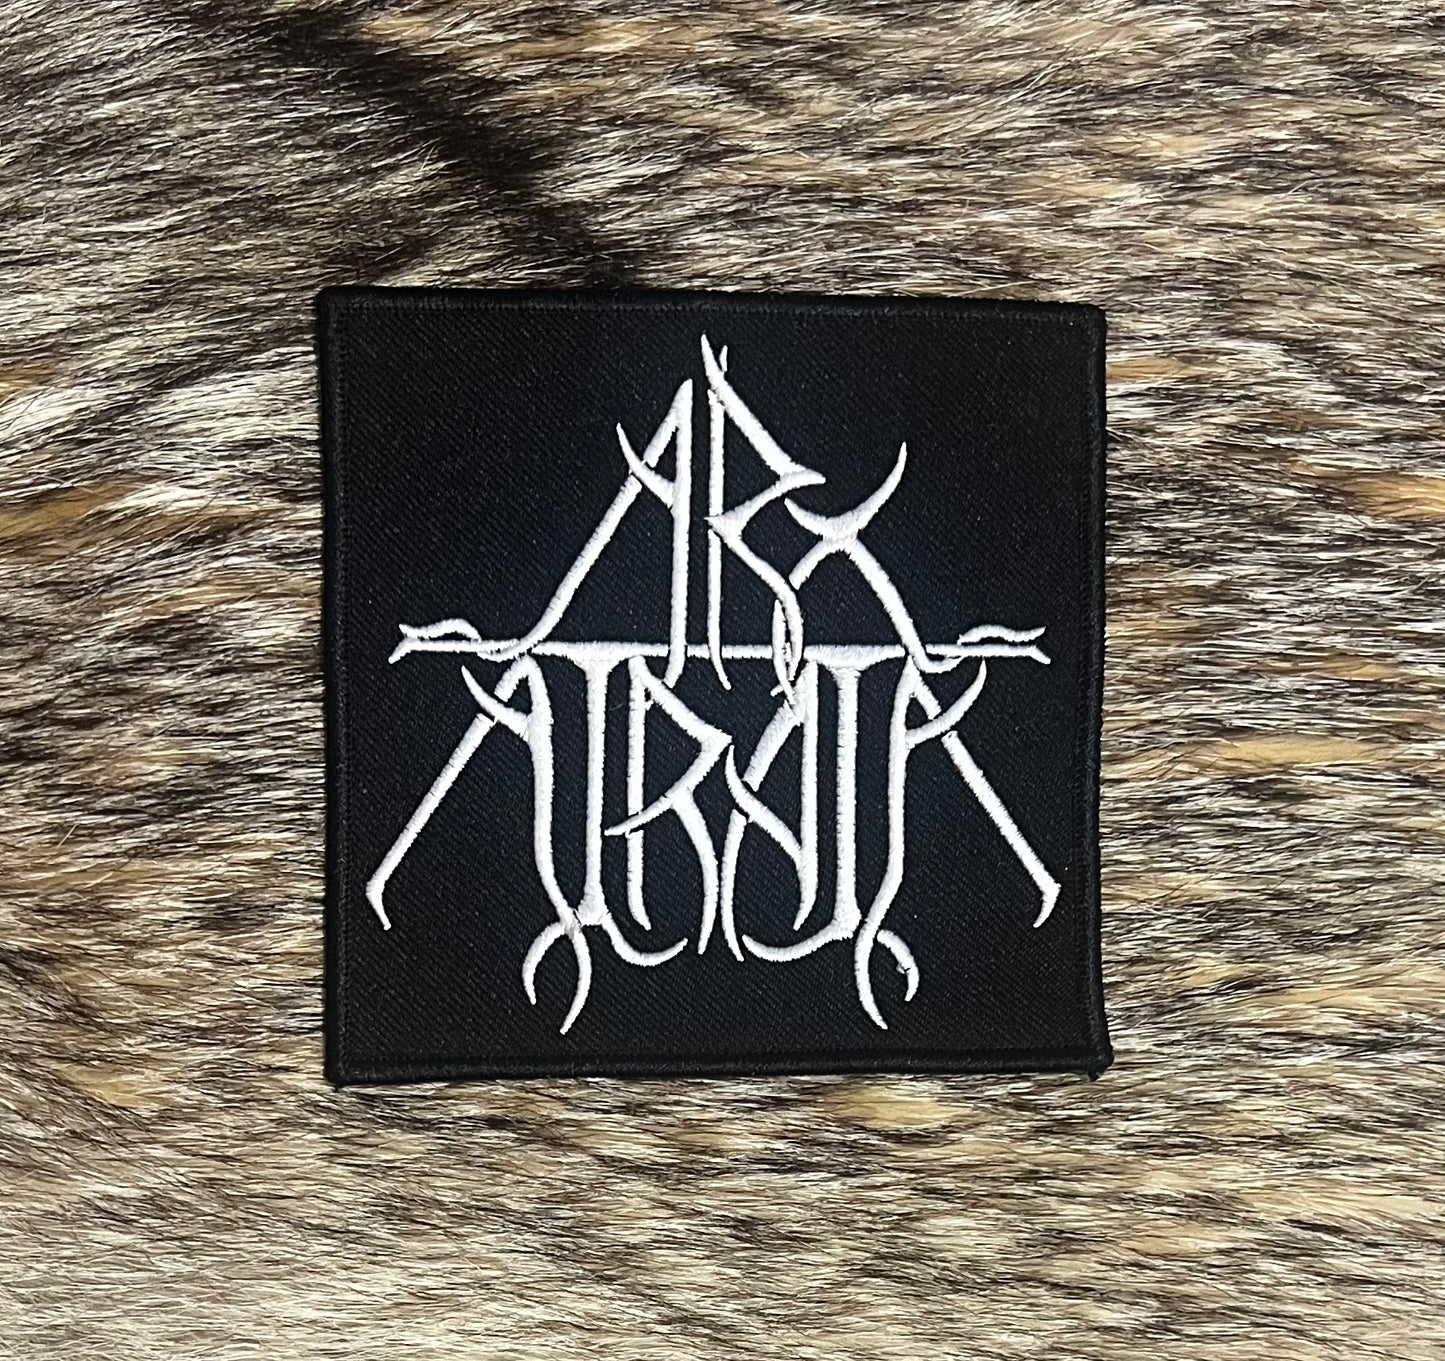 Arx Atrata - Logo Patch